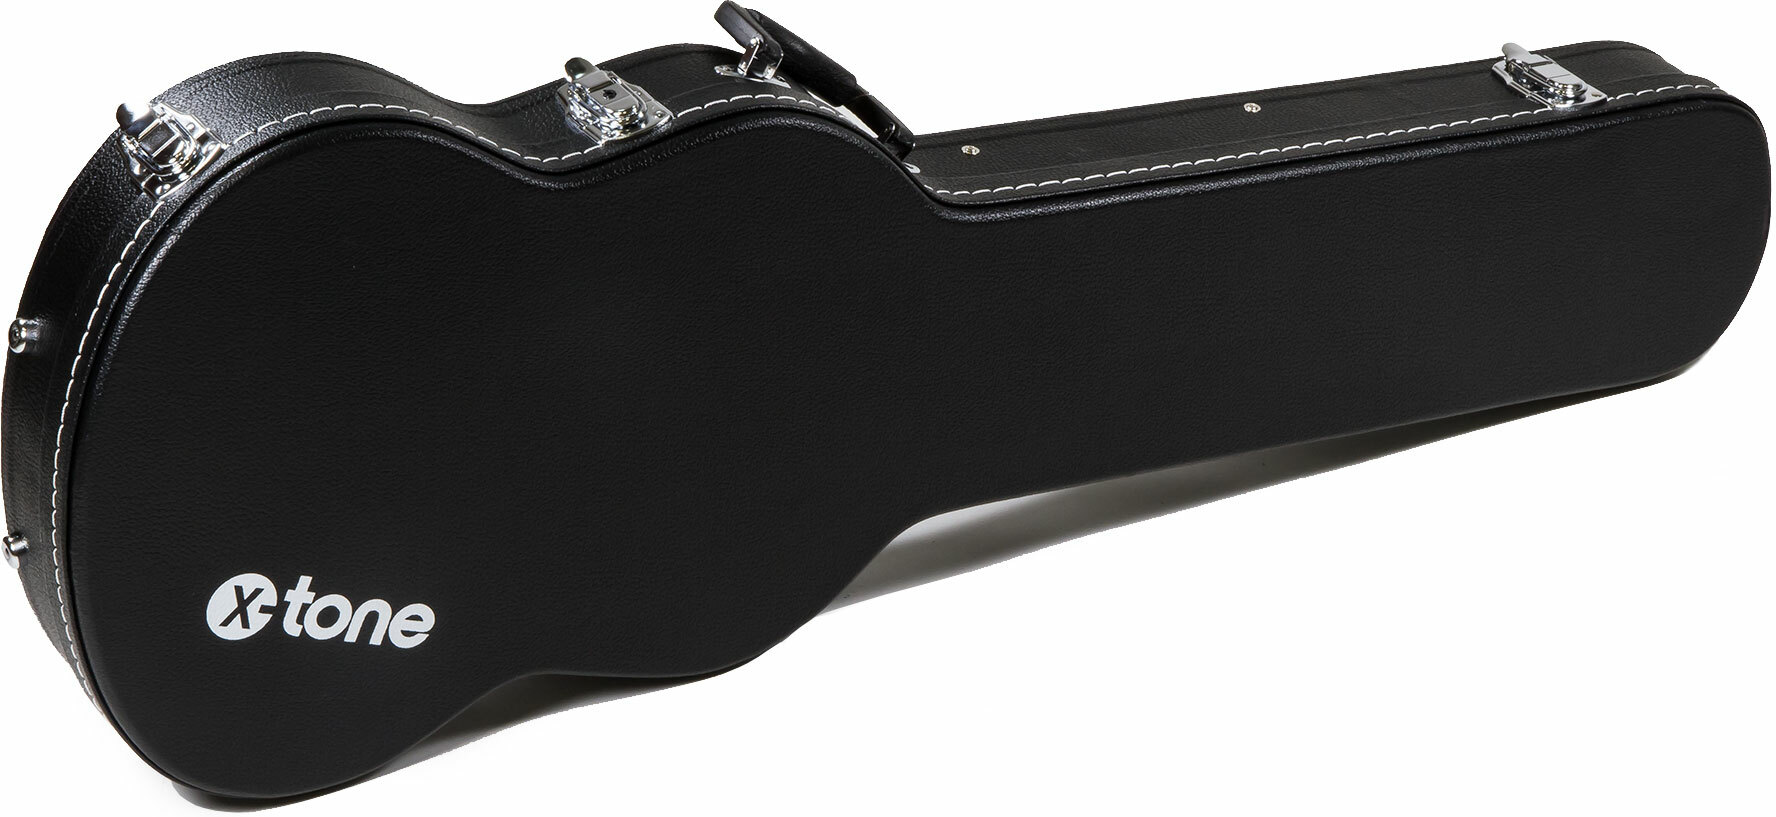 X-tone 1503 Standard Electrique Sg En Forme Black - Koffer für E-Gitarren - Main picture